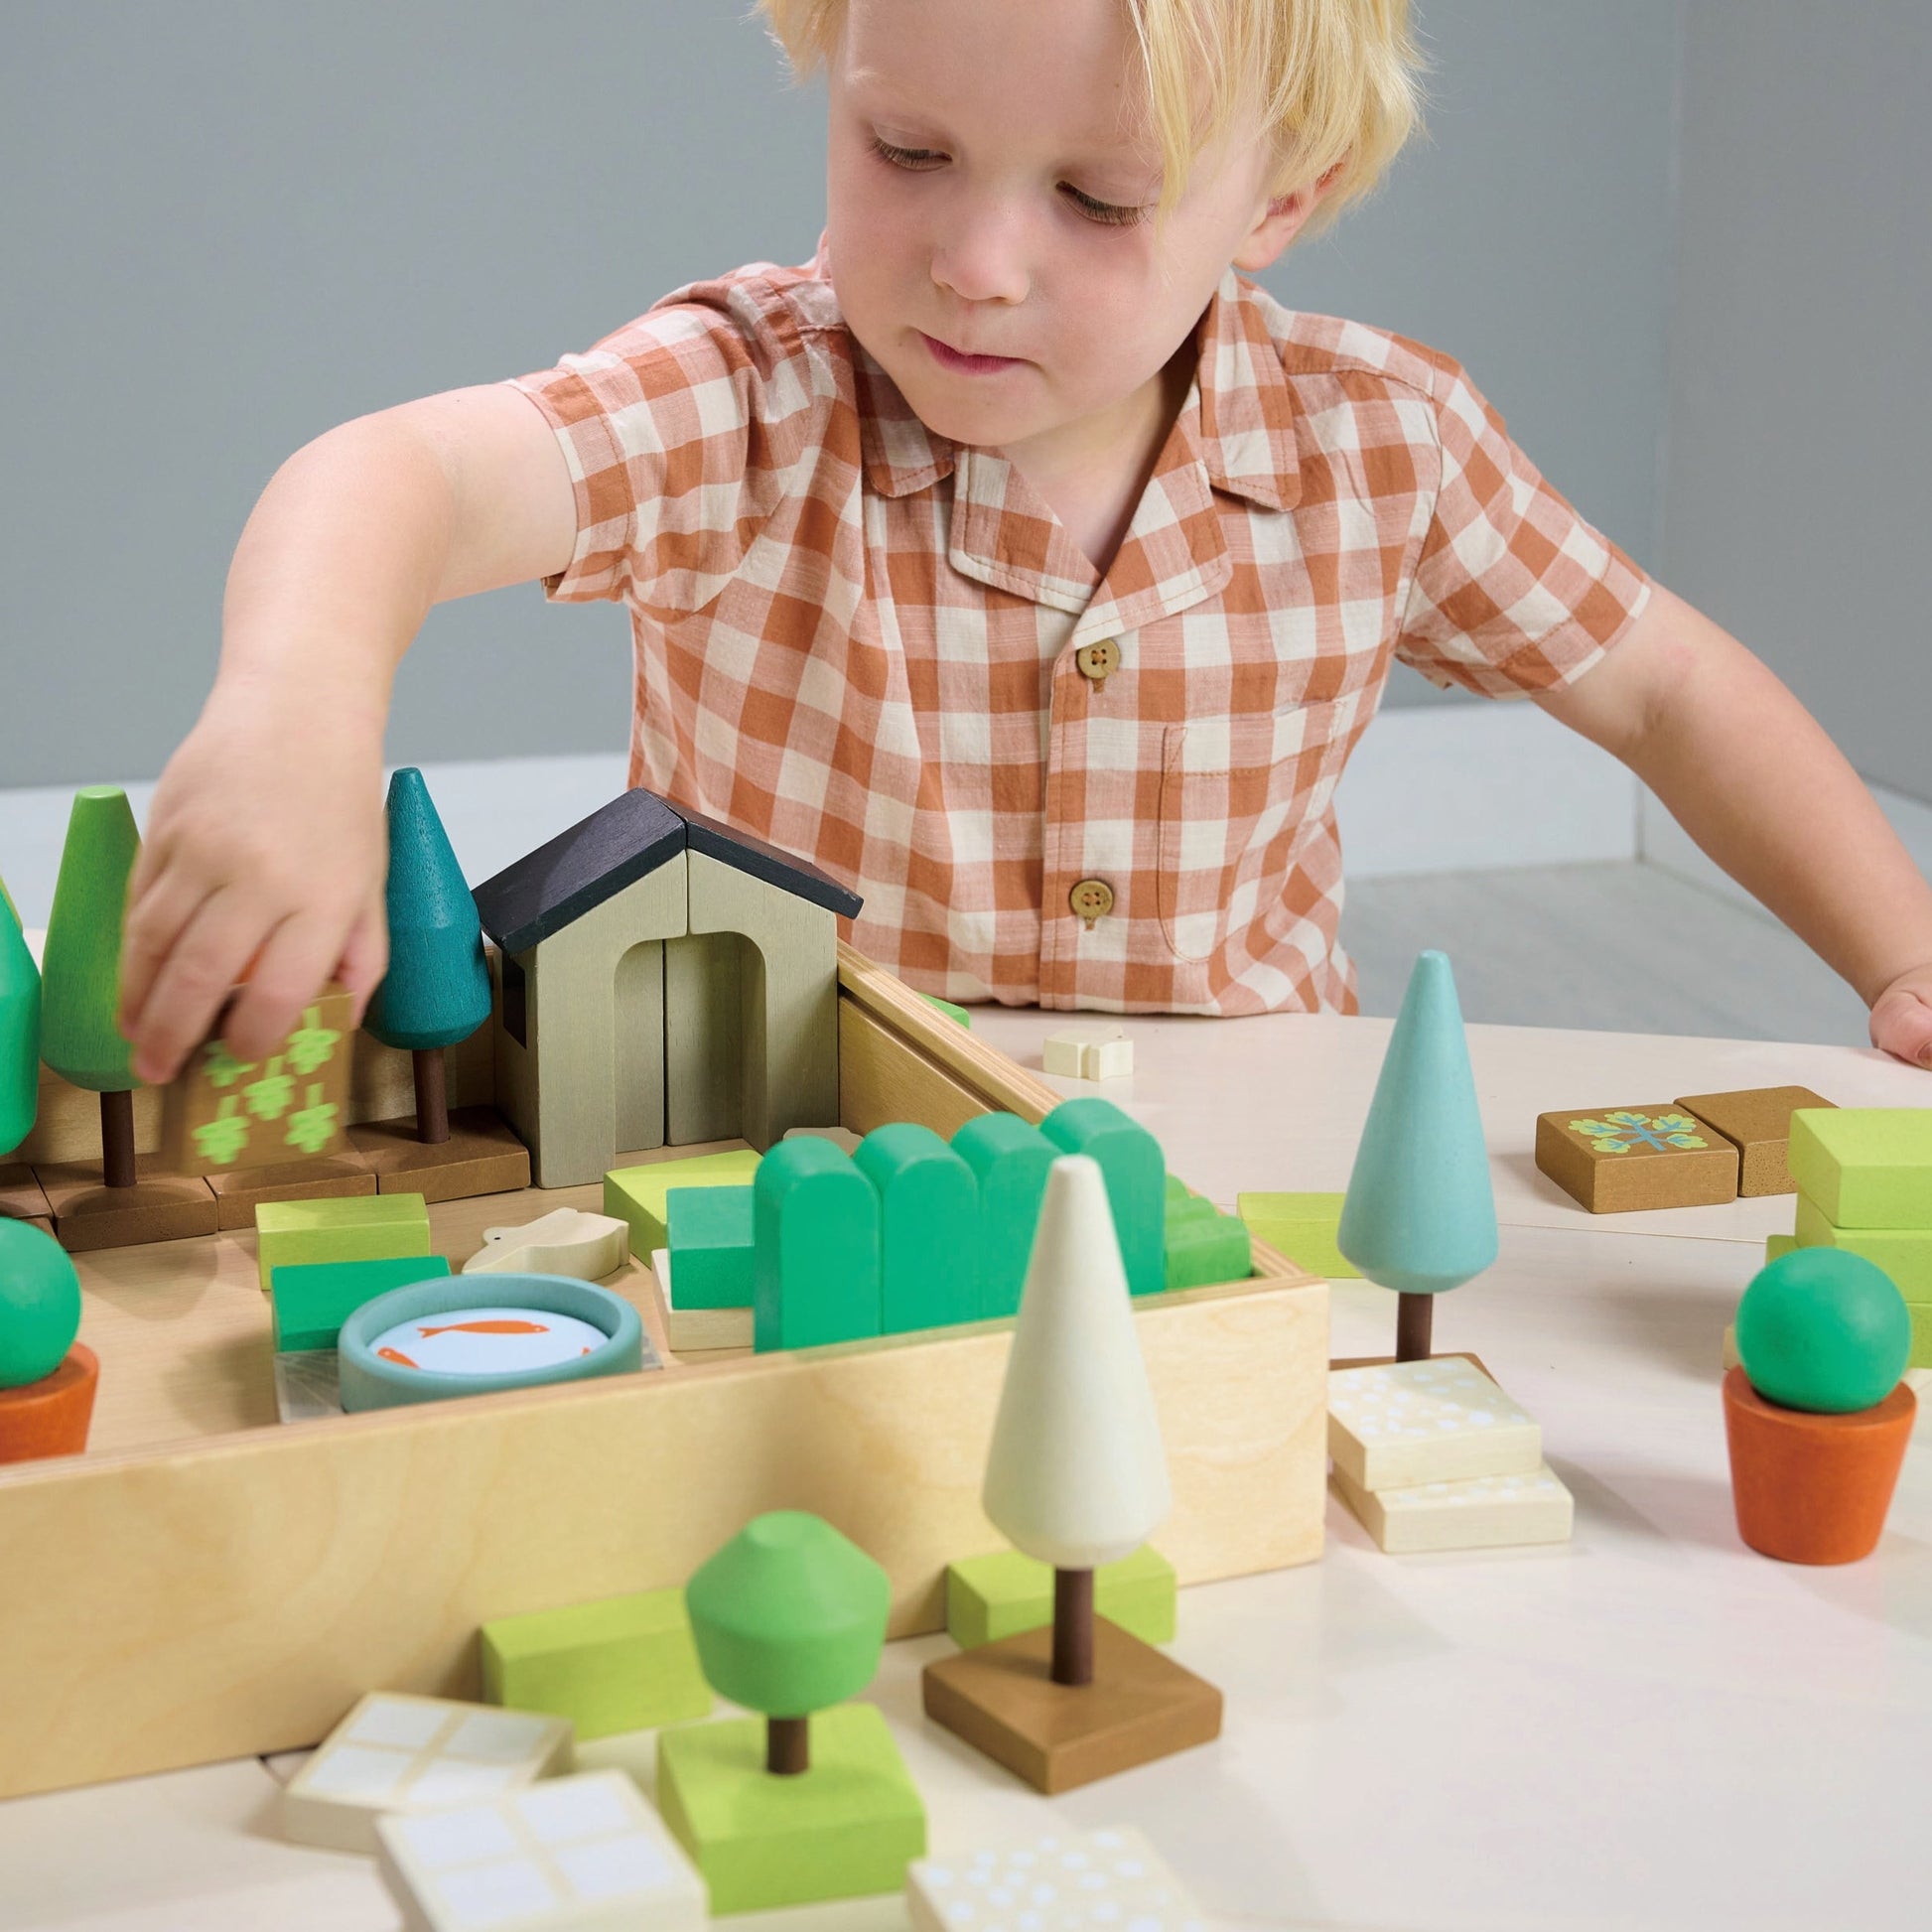 Tender Leaf Toys Wooden Little Garden Designer Playset